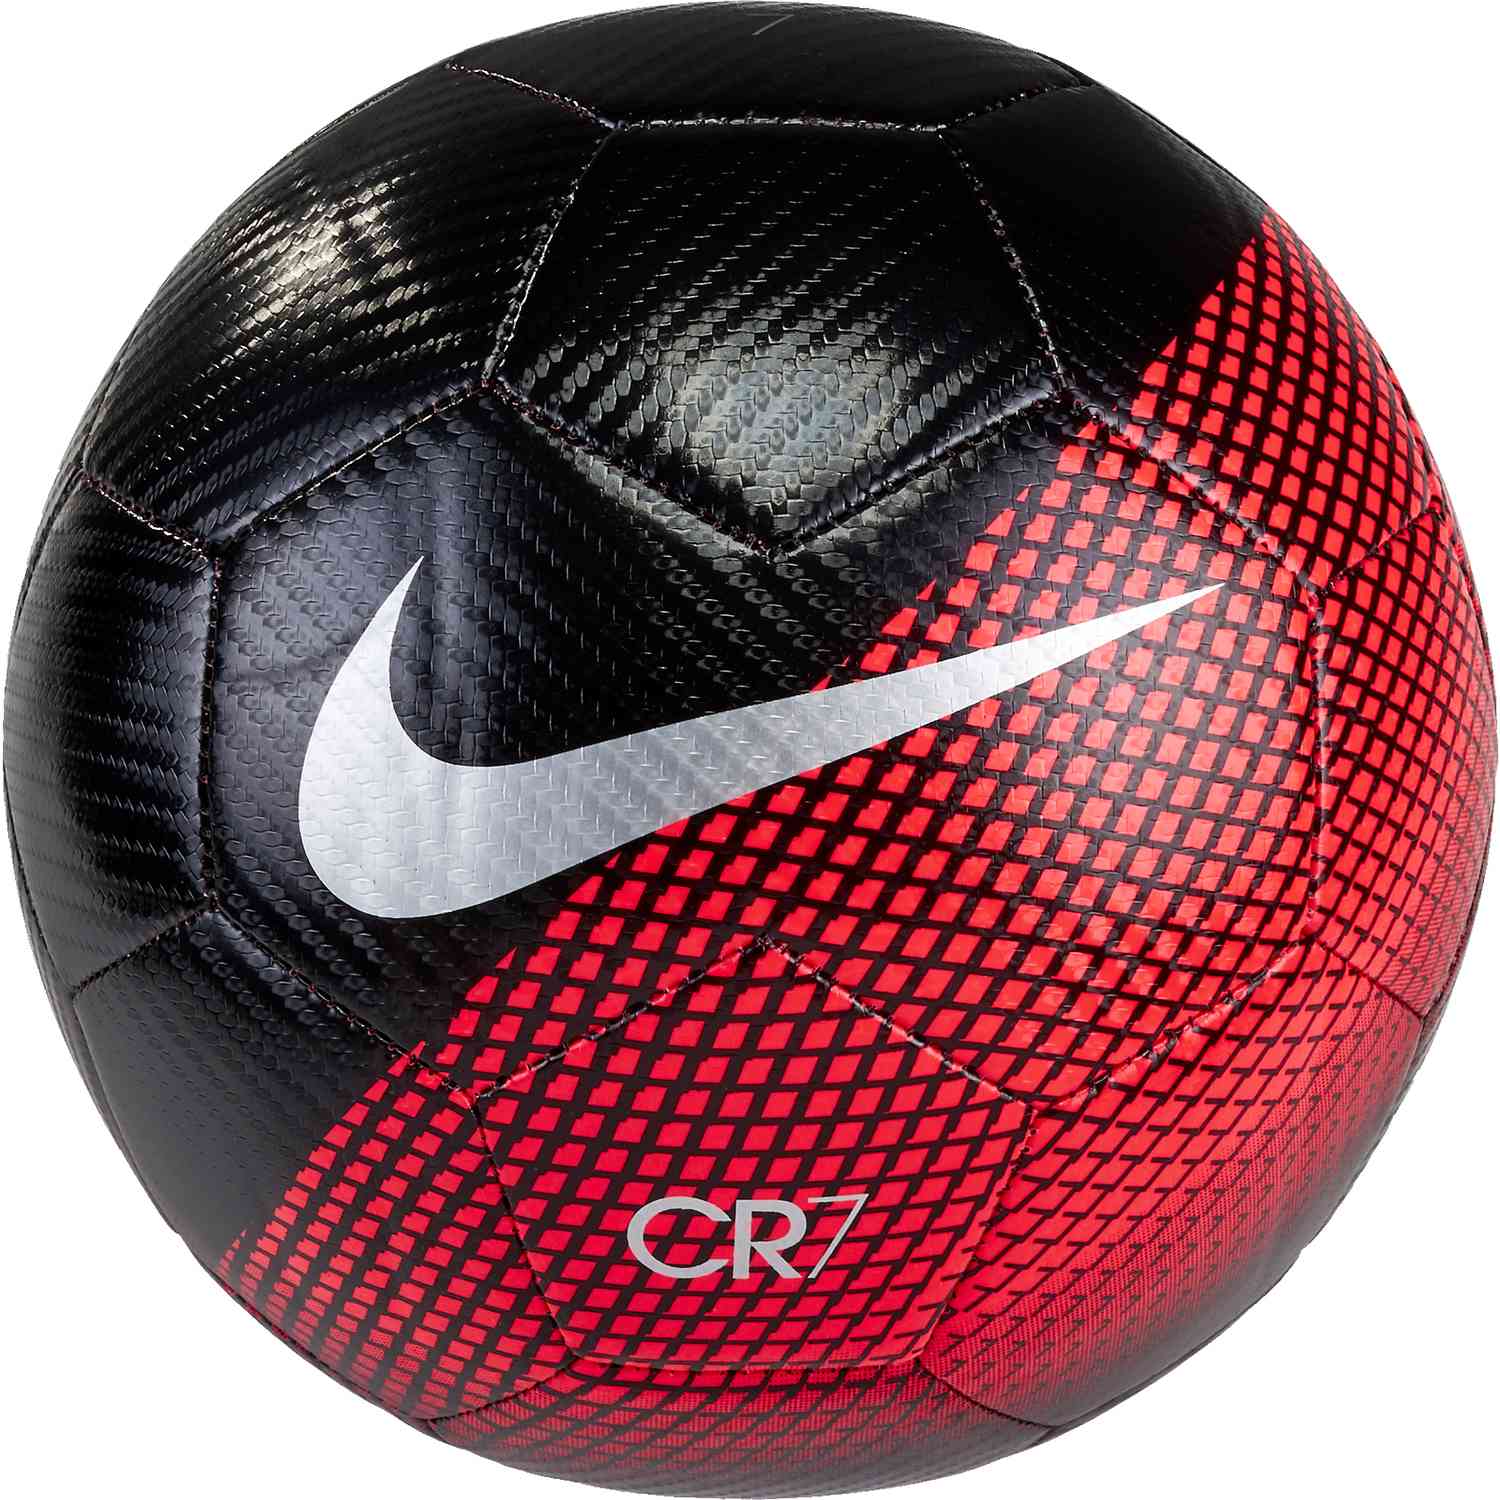 cristiano ronaldo soccer ball